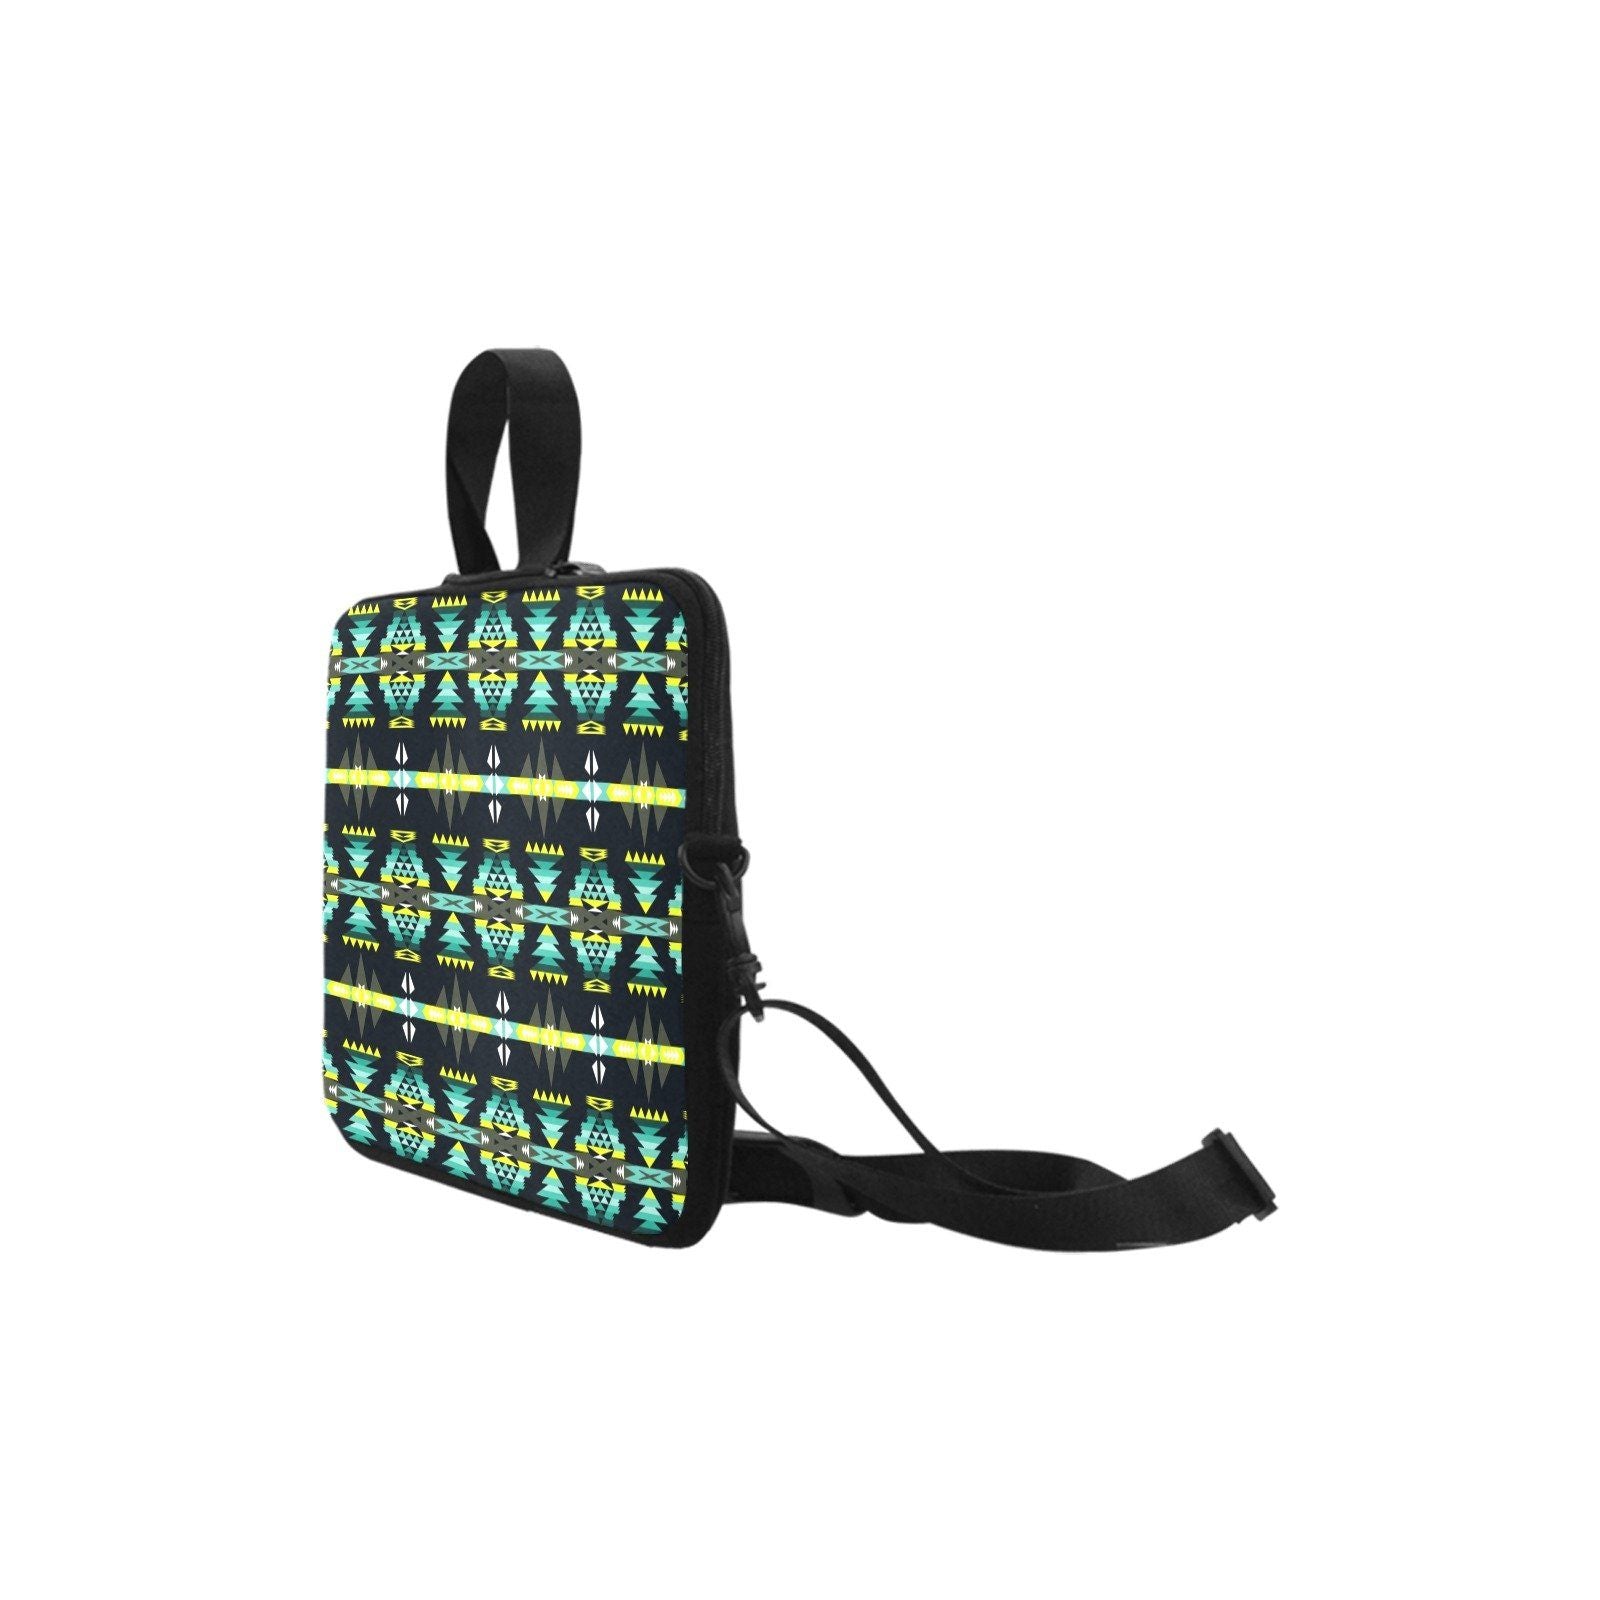 River Trail Laptop Handbags 11" bag e-joyer 